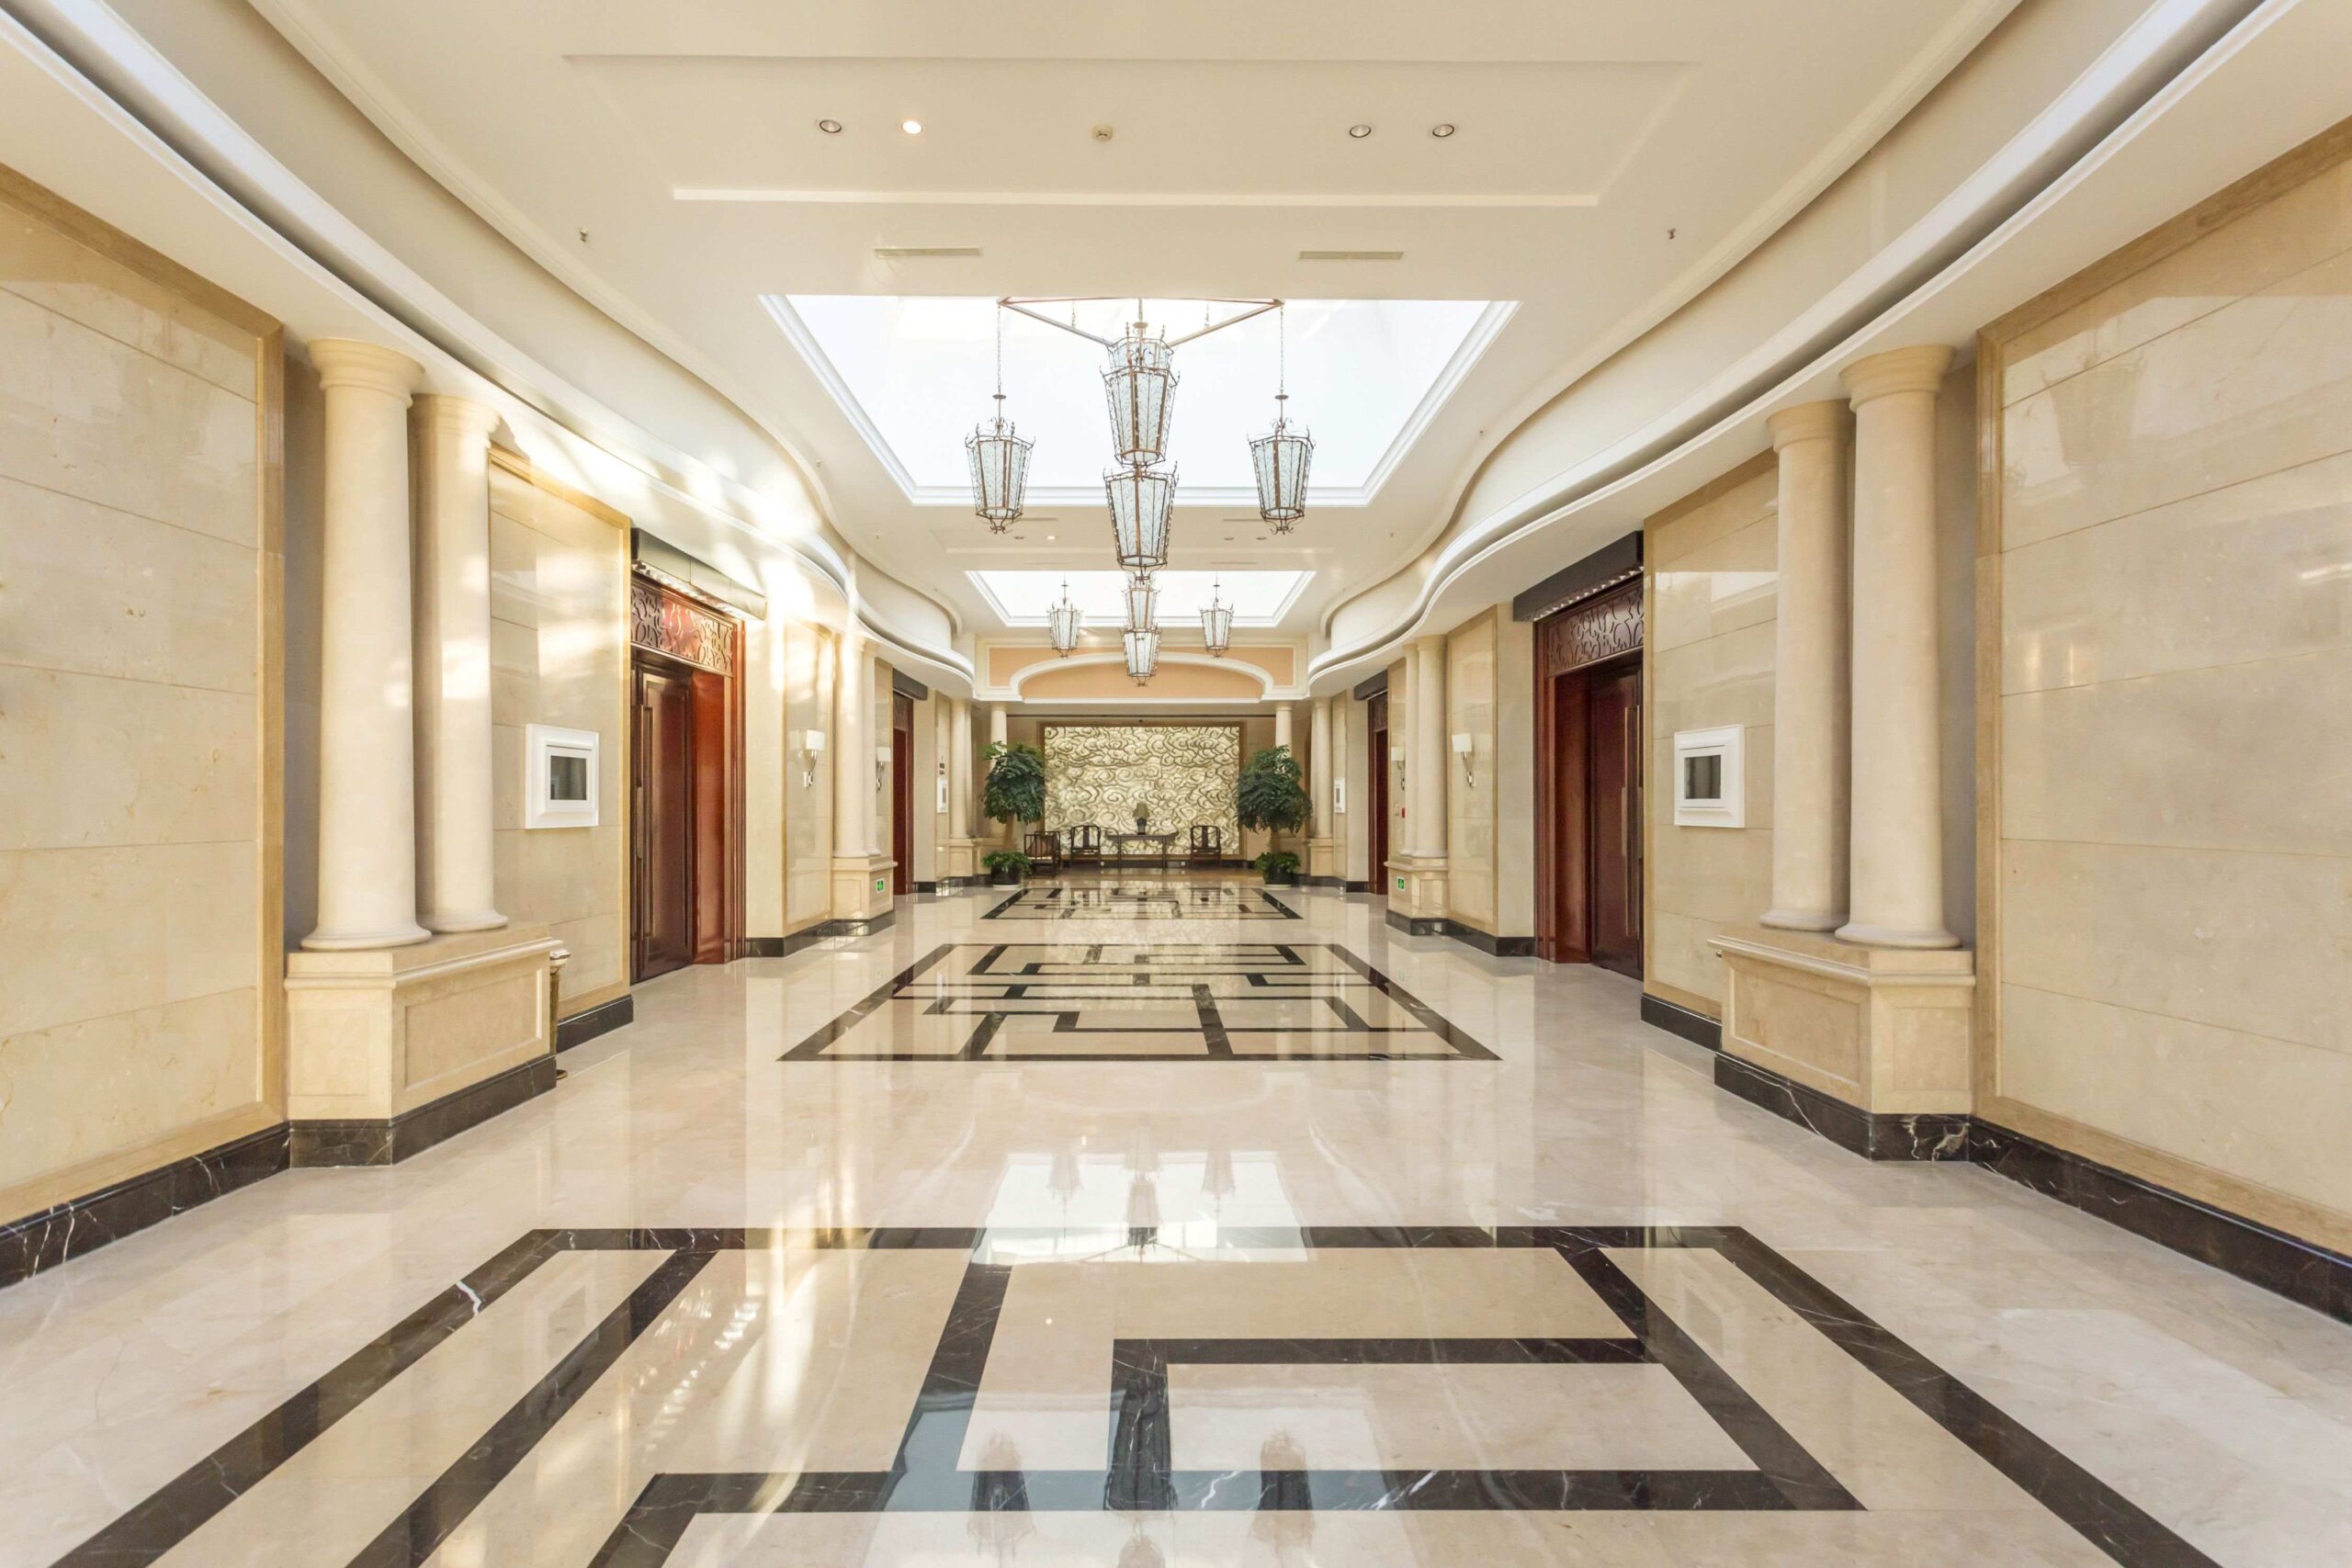 Luxury hotel lobby interior design